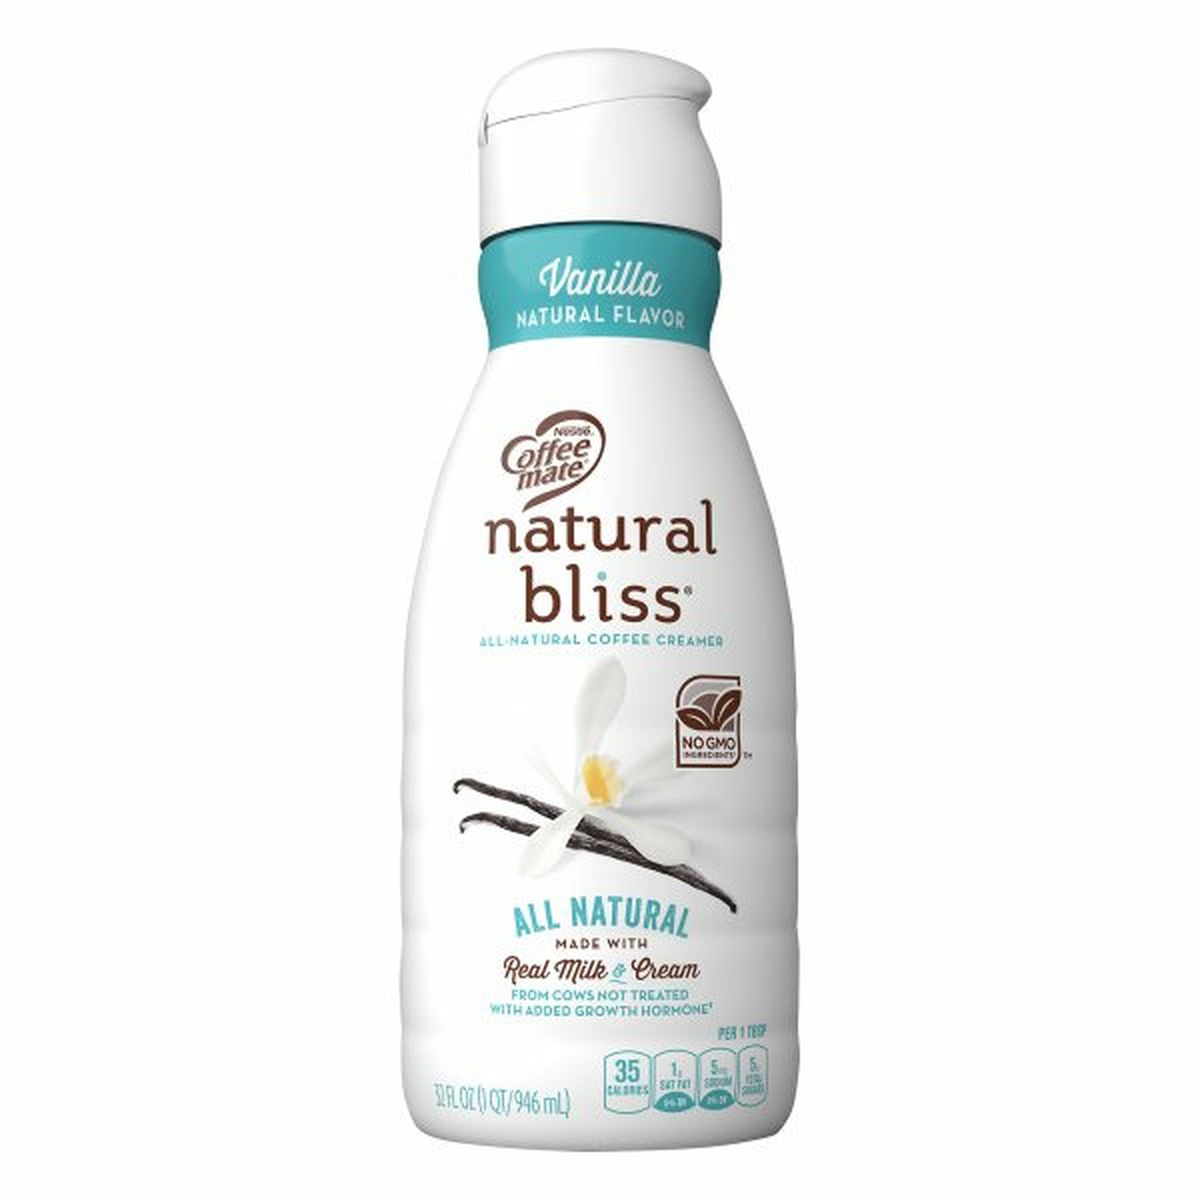 Calories in Natural Bliss Natural Bliss Coffee Creamer, Vanilla